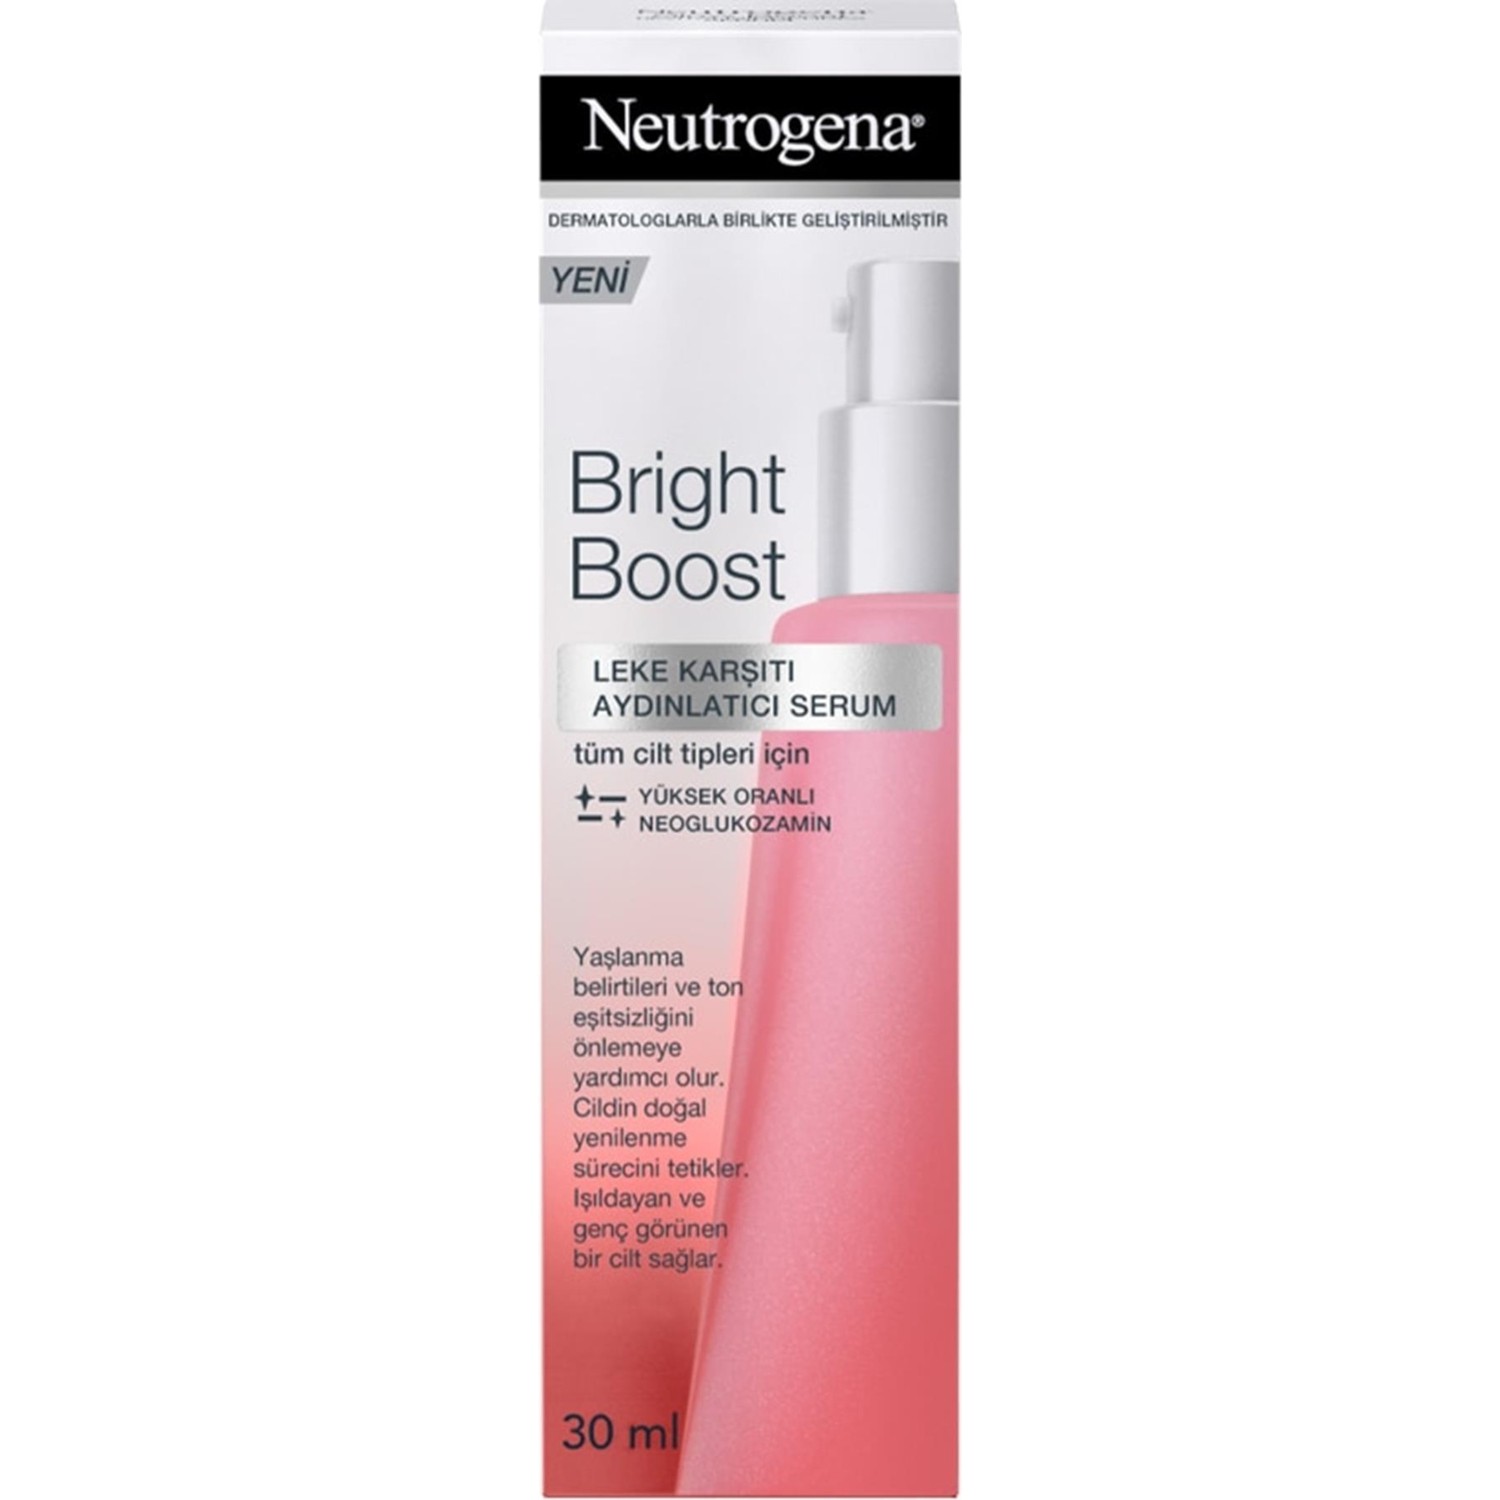 Сыворотка осветляющая Neutrogena Bright Boost против несовершенств, 30 мл